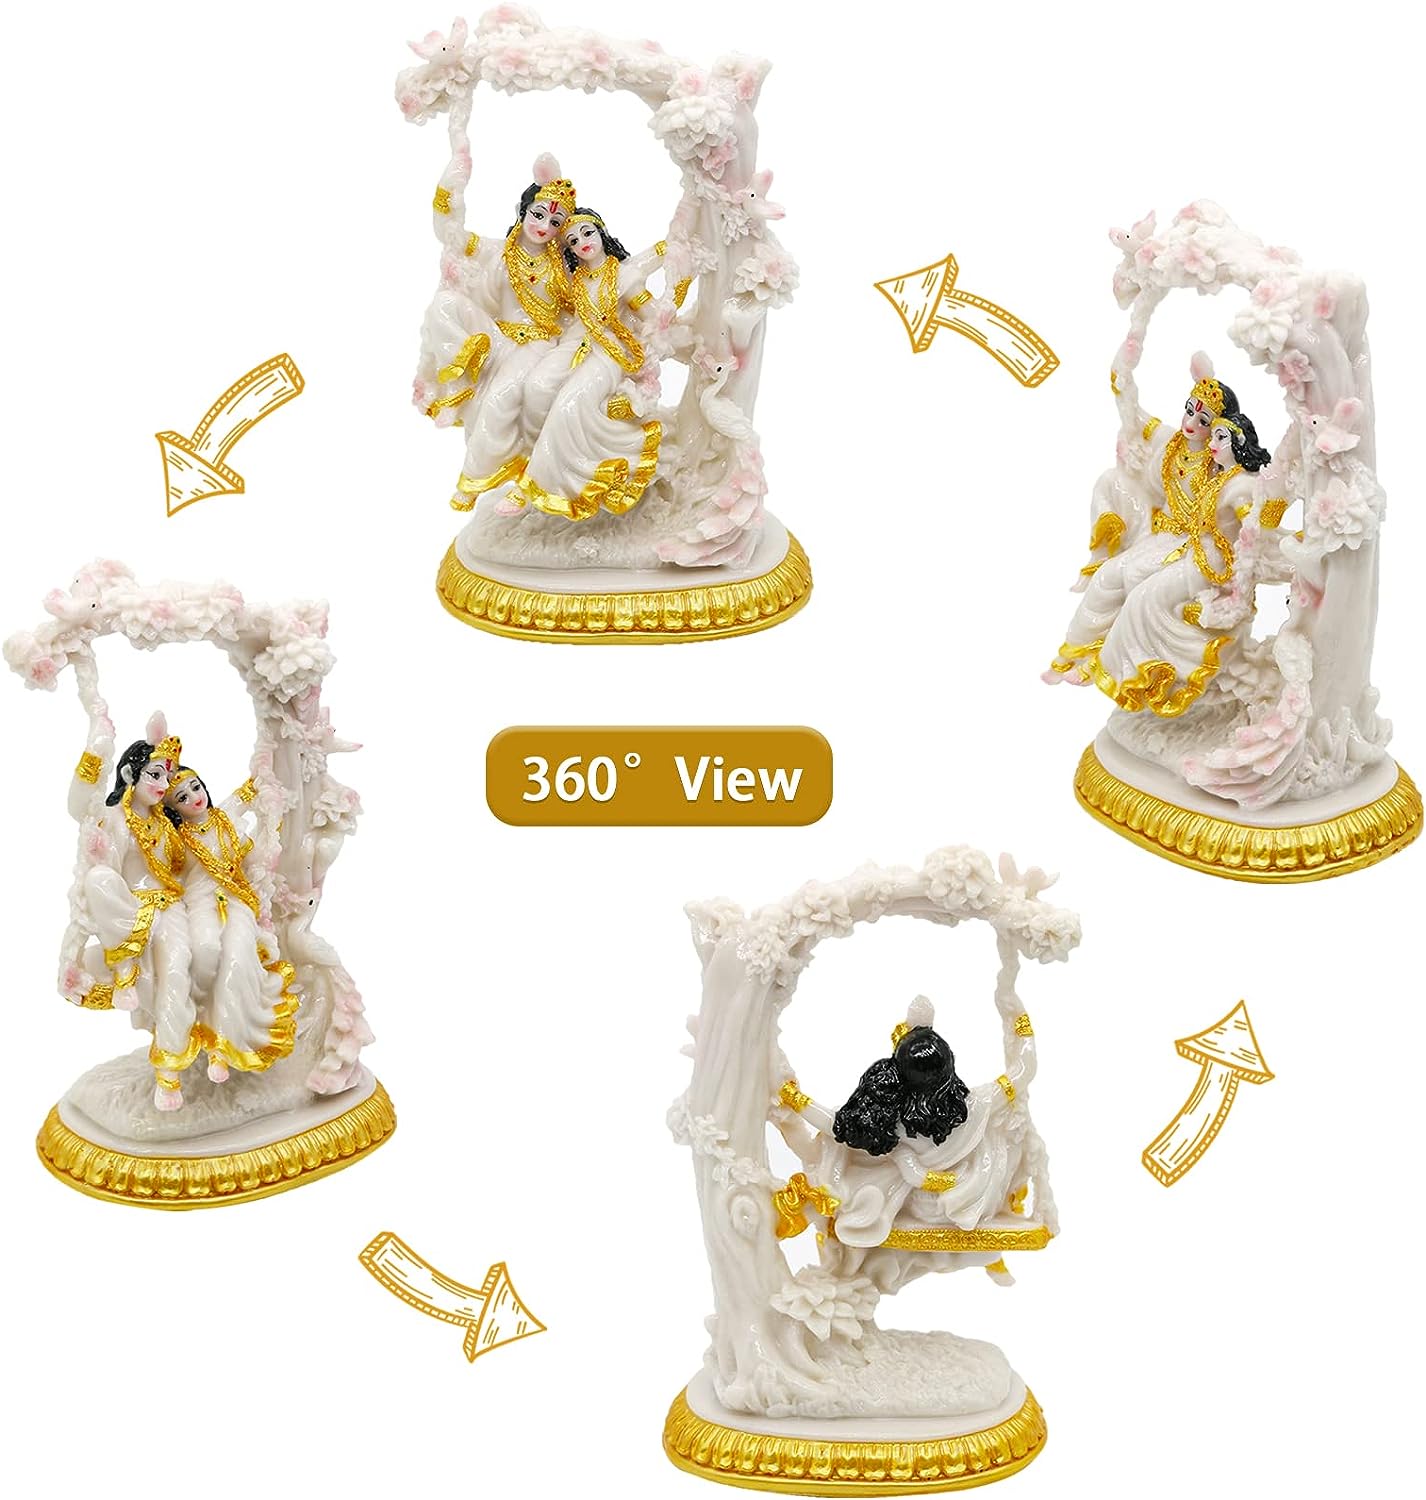 alikiki Indian God Radha Krishna Statue- 6.7”H India Idol Radha Krishna Statue for Indian Wedding Return Gifts,Hindu Gifts for India Couple,Murti Home Office Temple Mandir Pooja Decor Puja Item